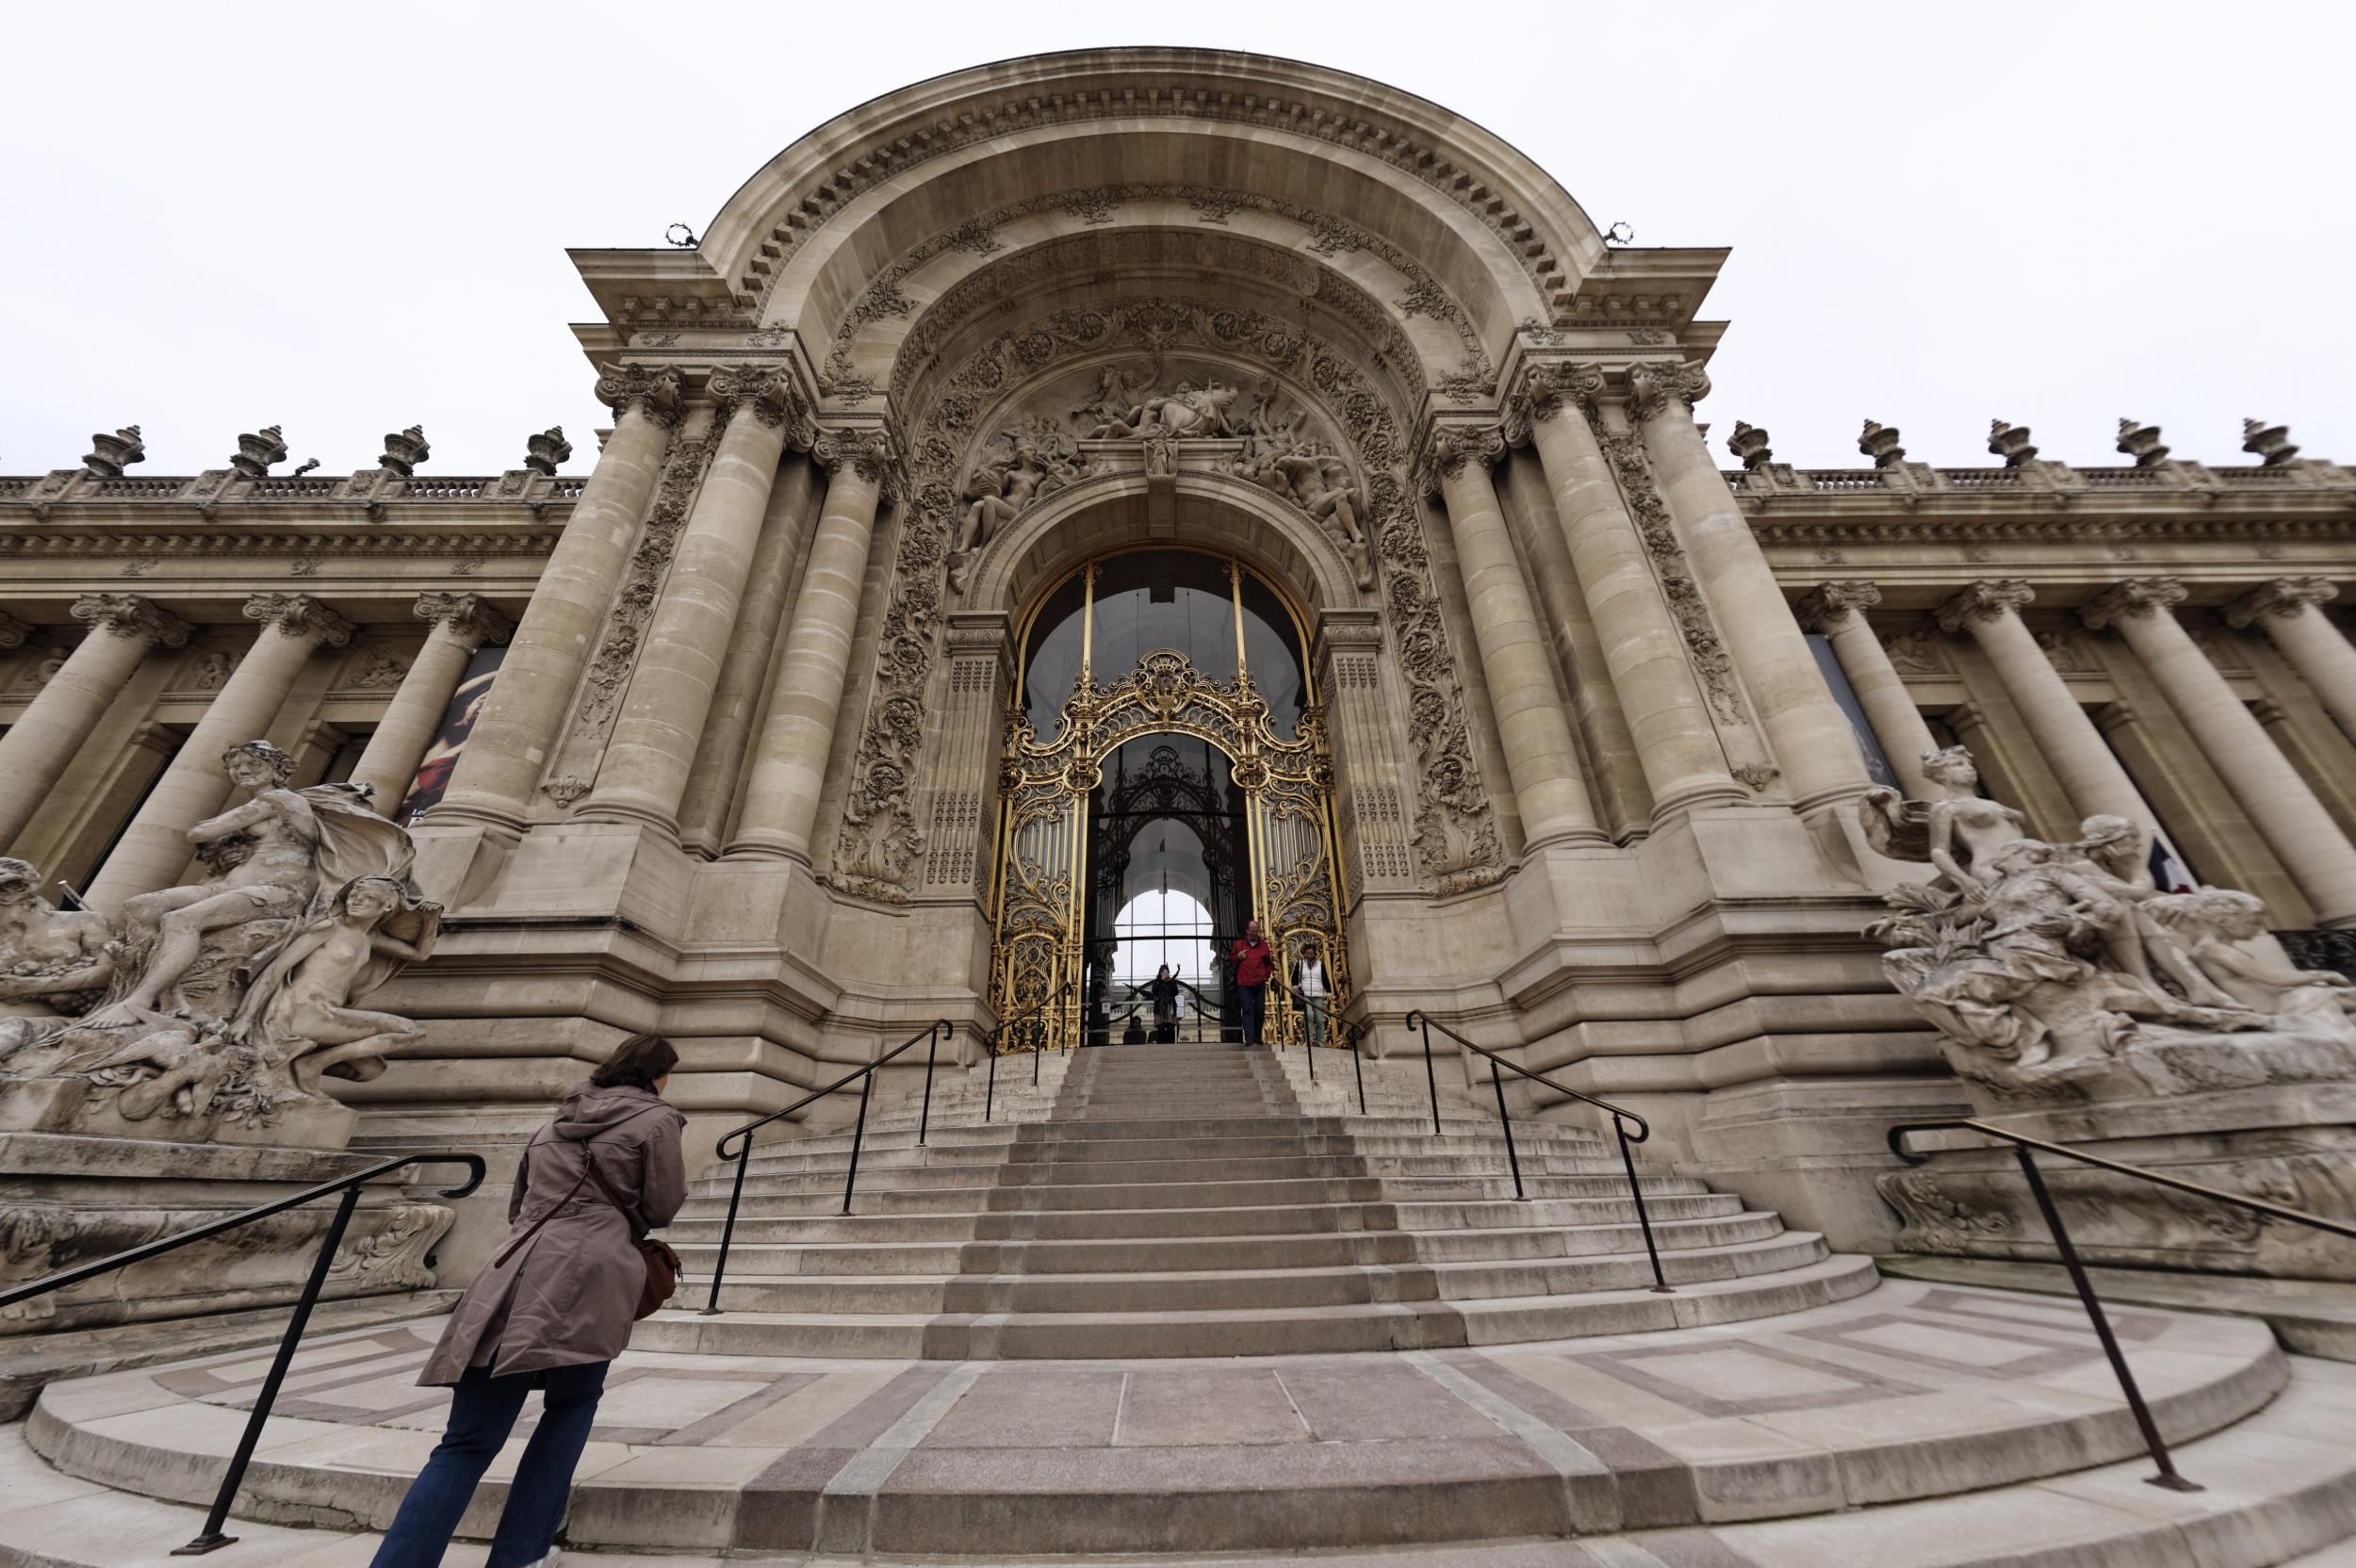 The Petit Palais museum